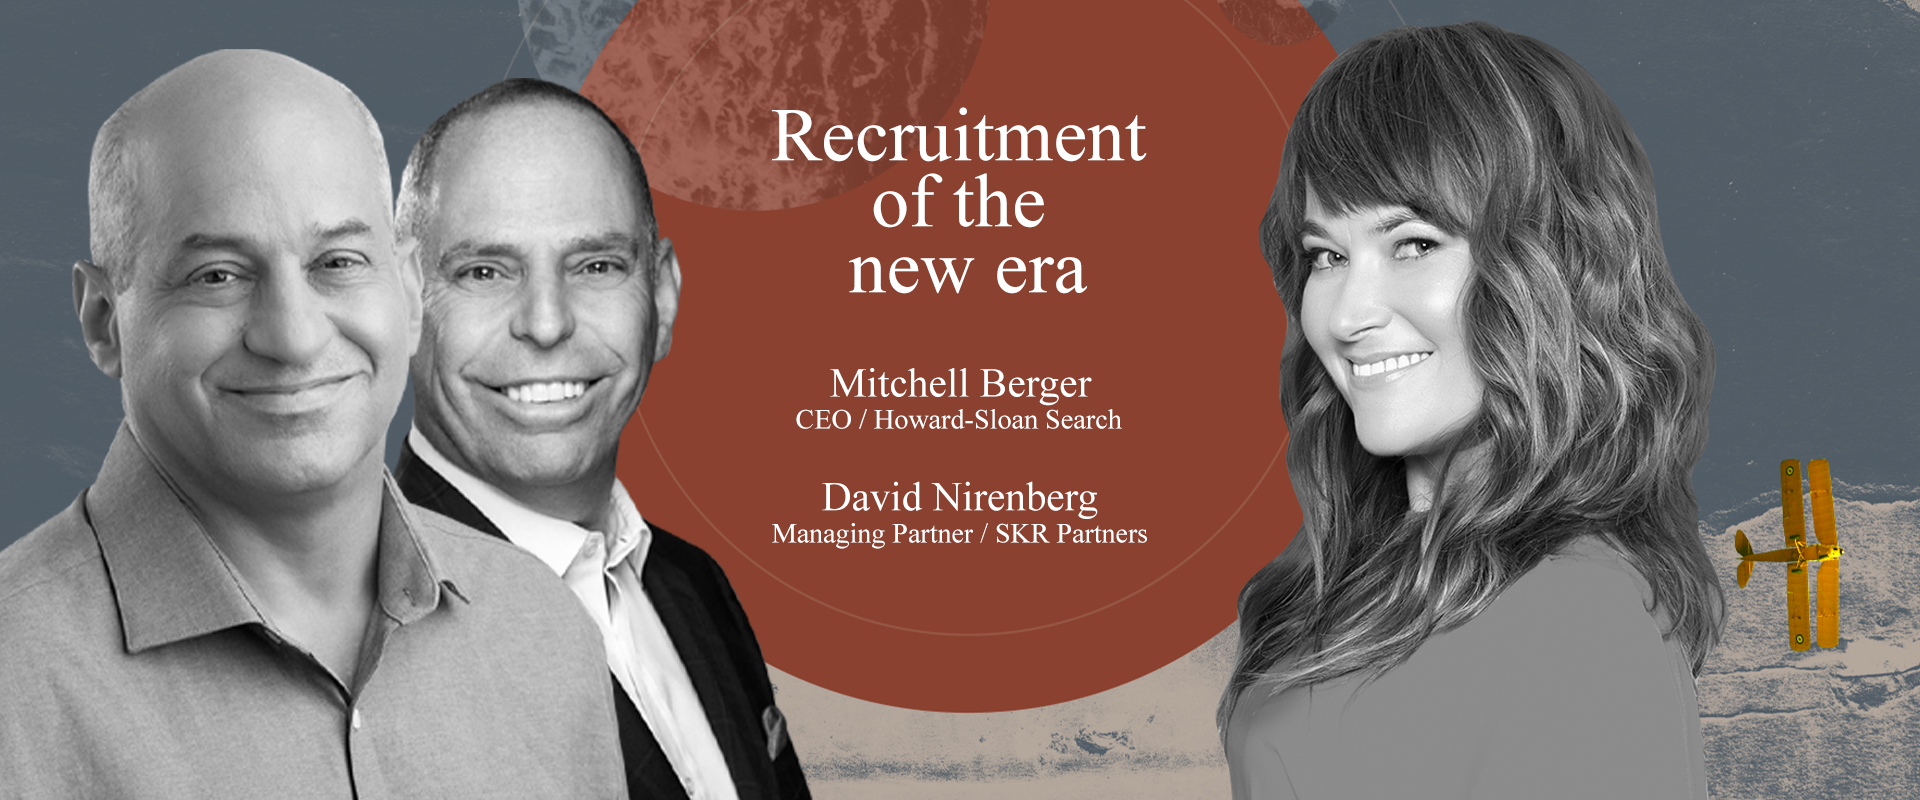 Recruitment of the new era